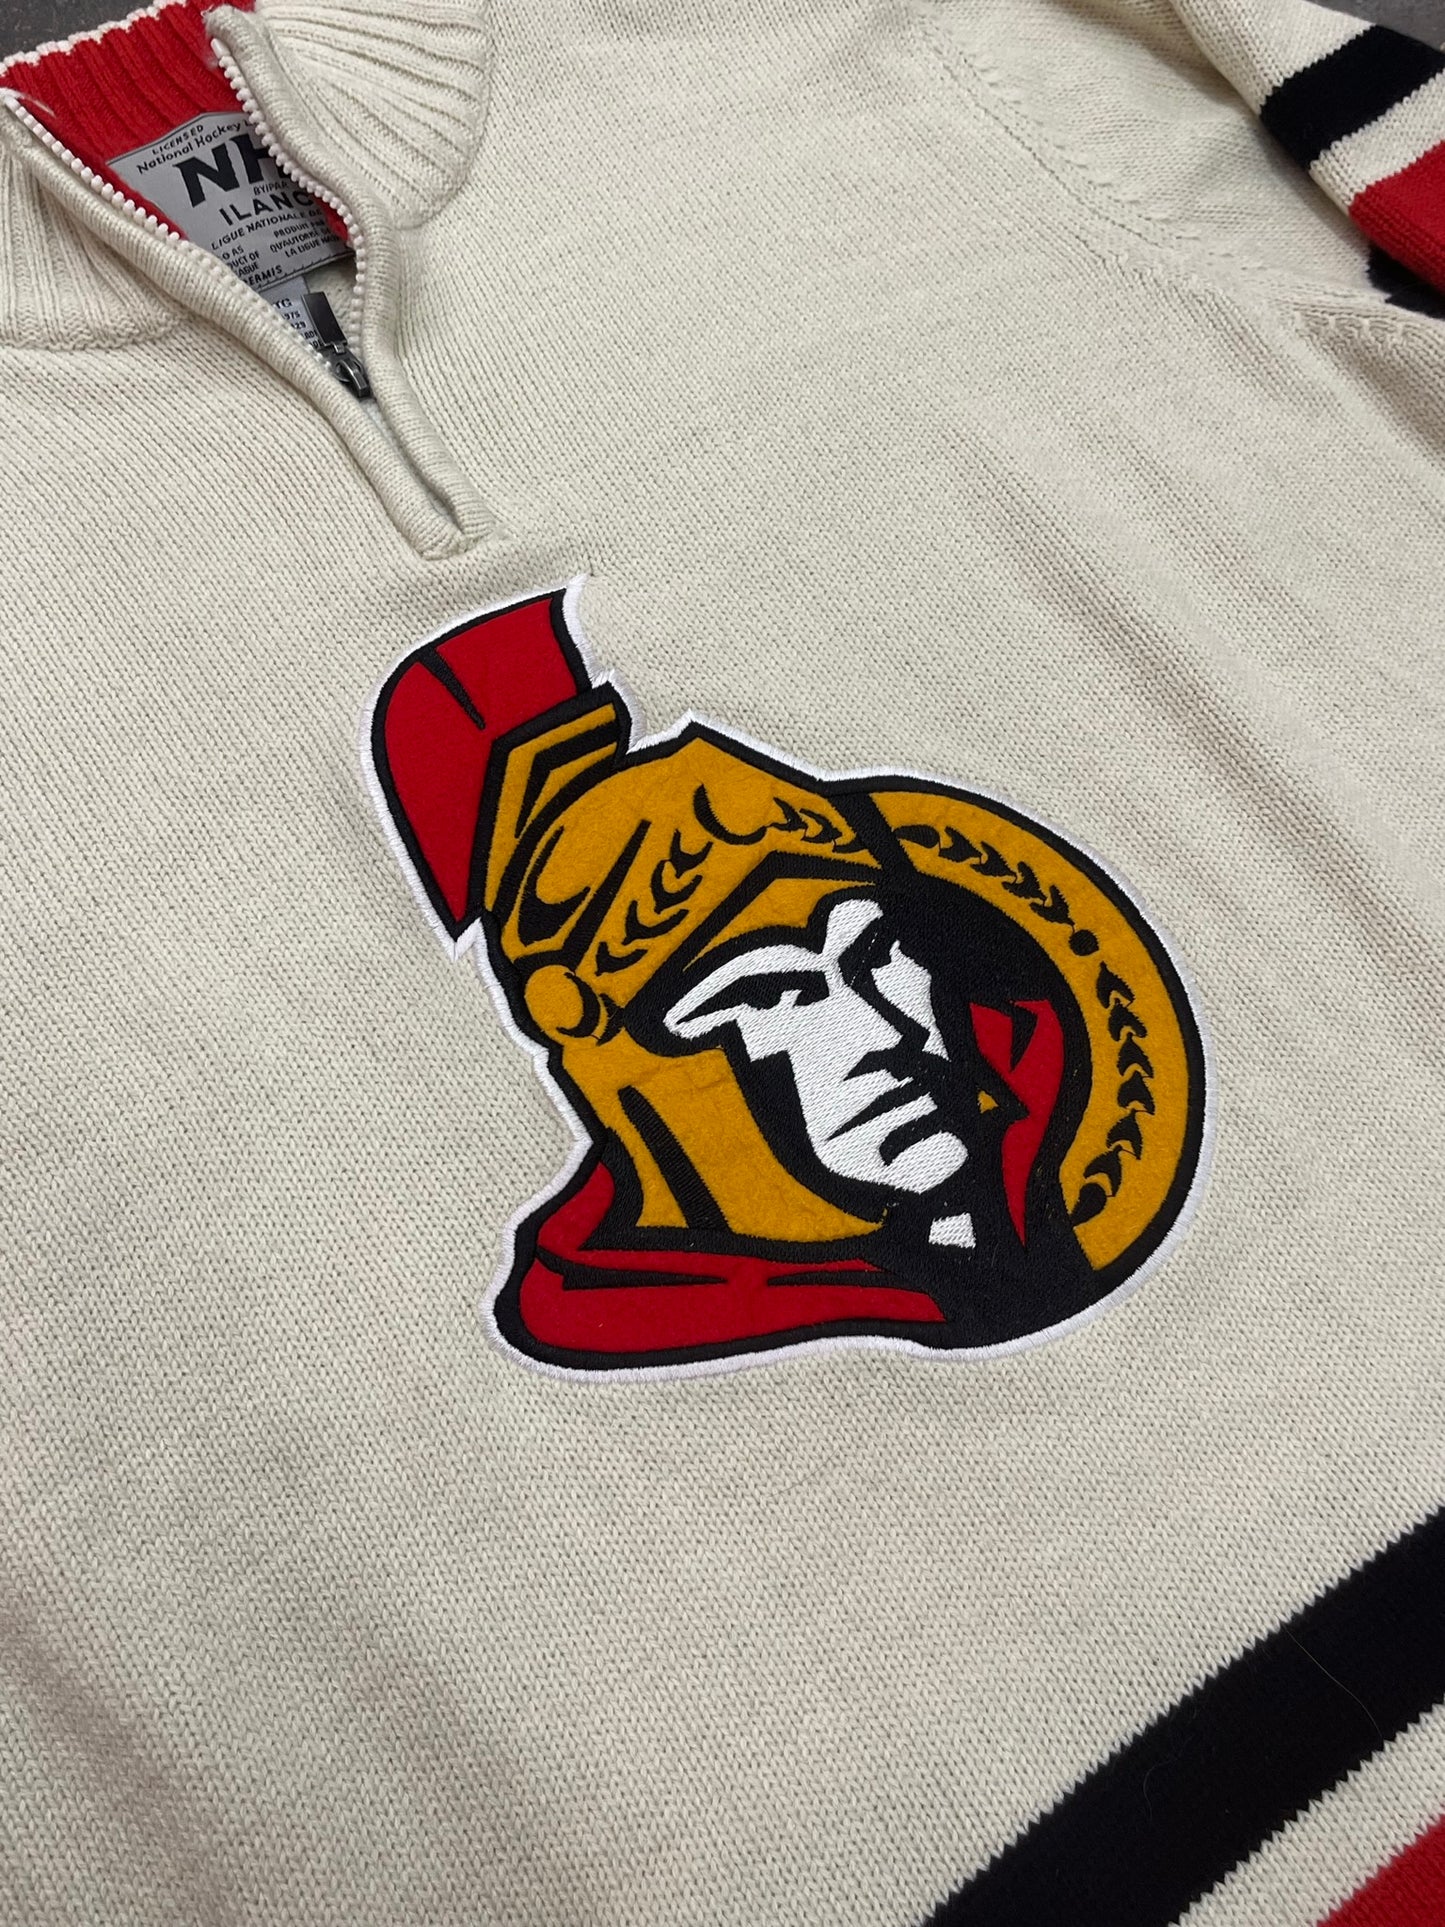 Ottawa Senators Knitted Quarter Zip Size XL